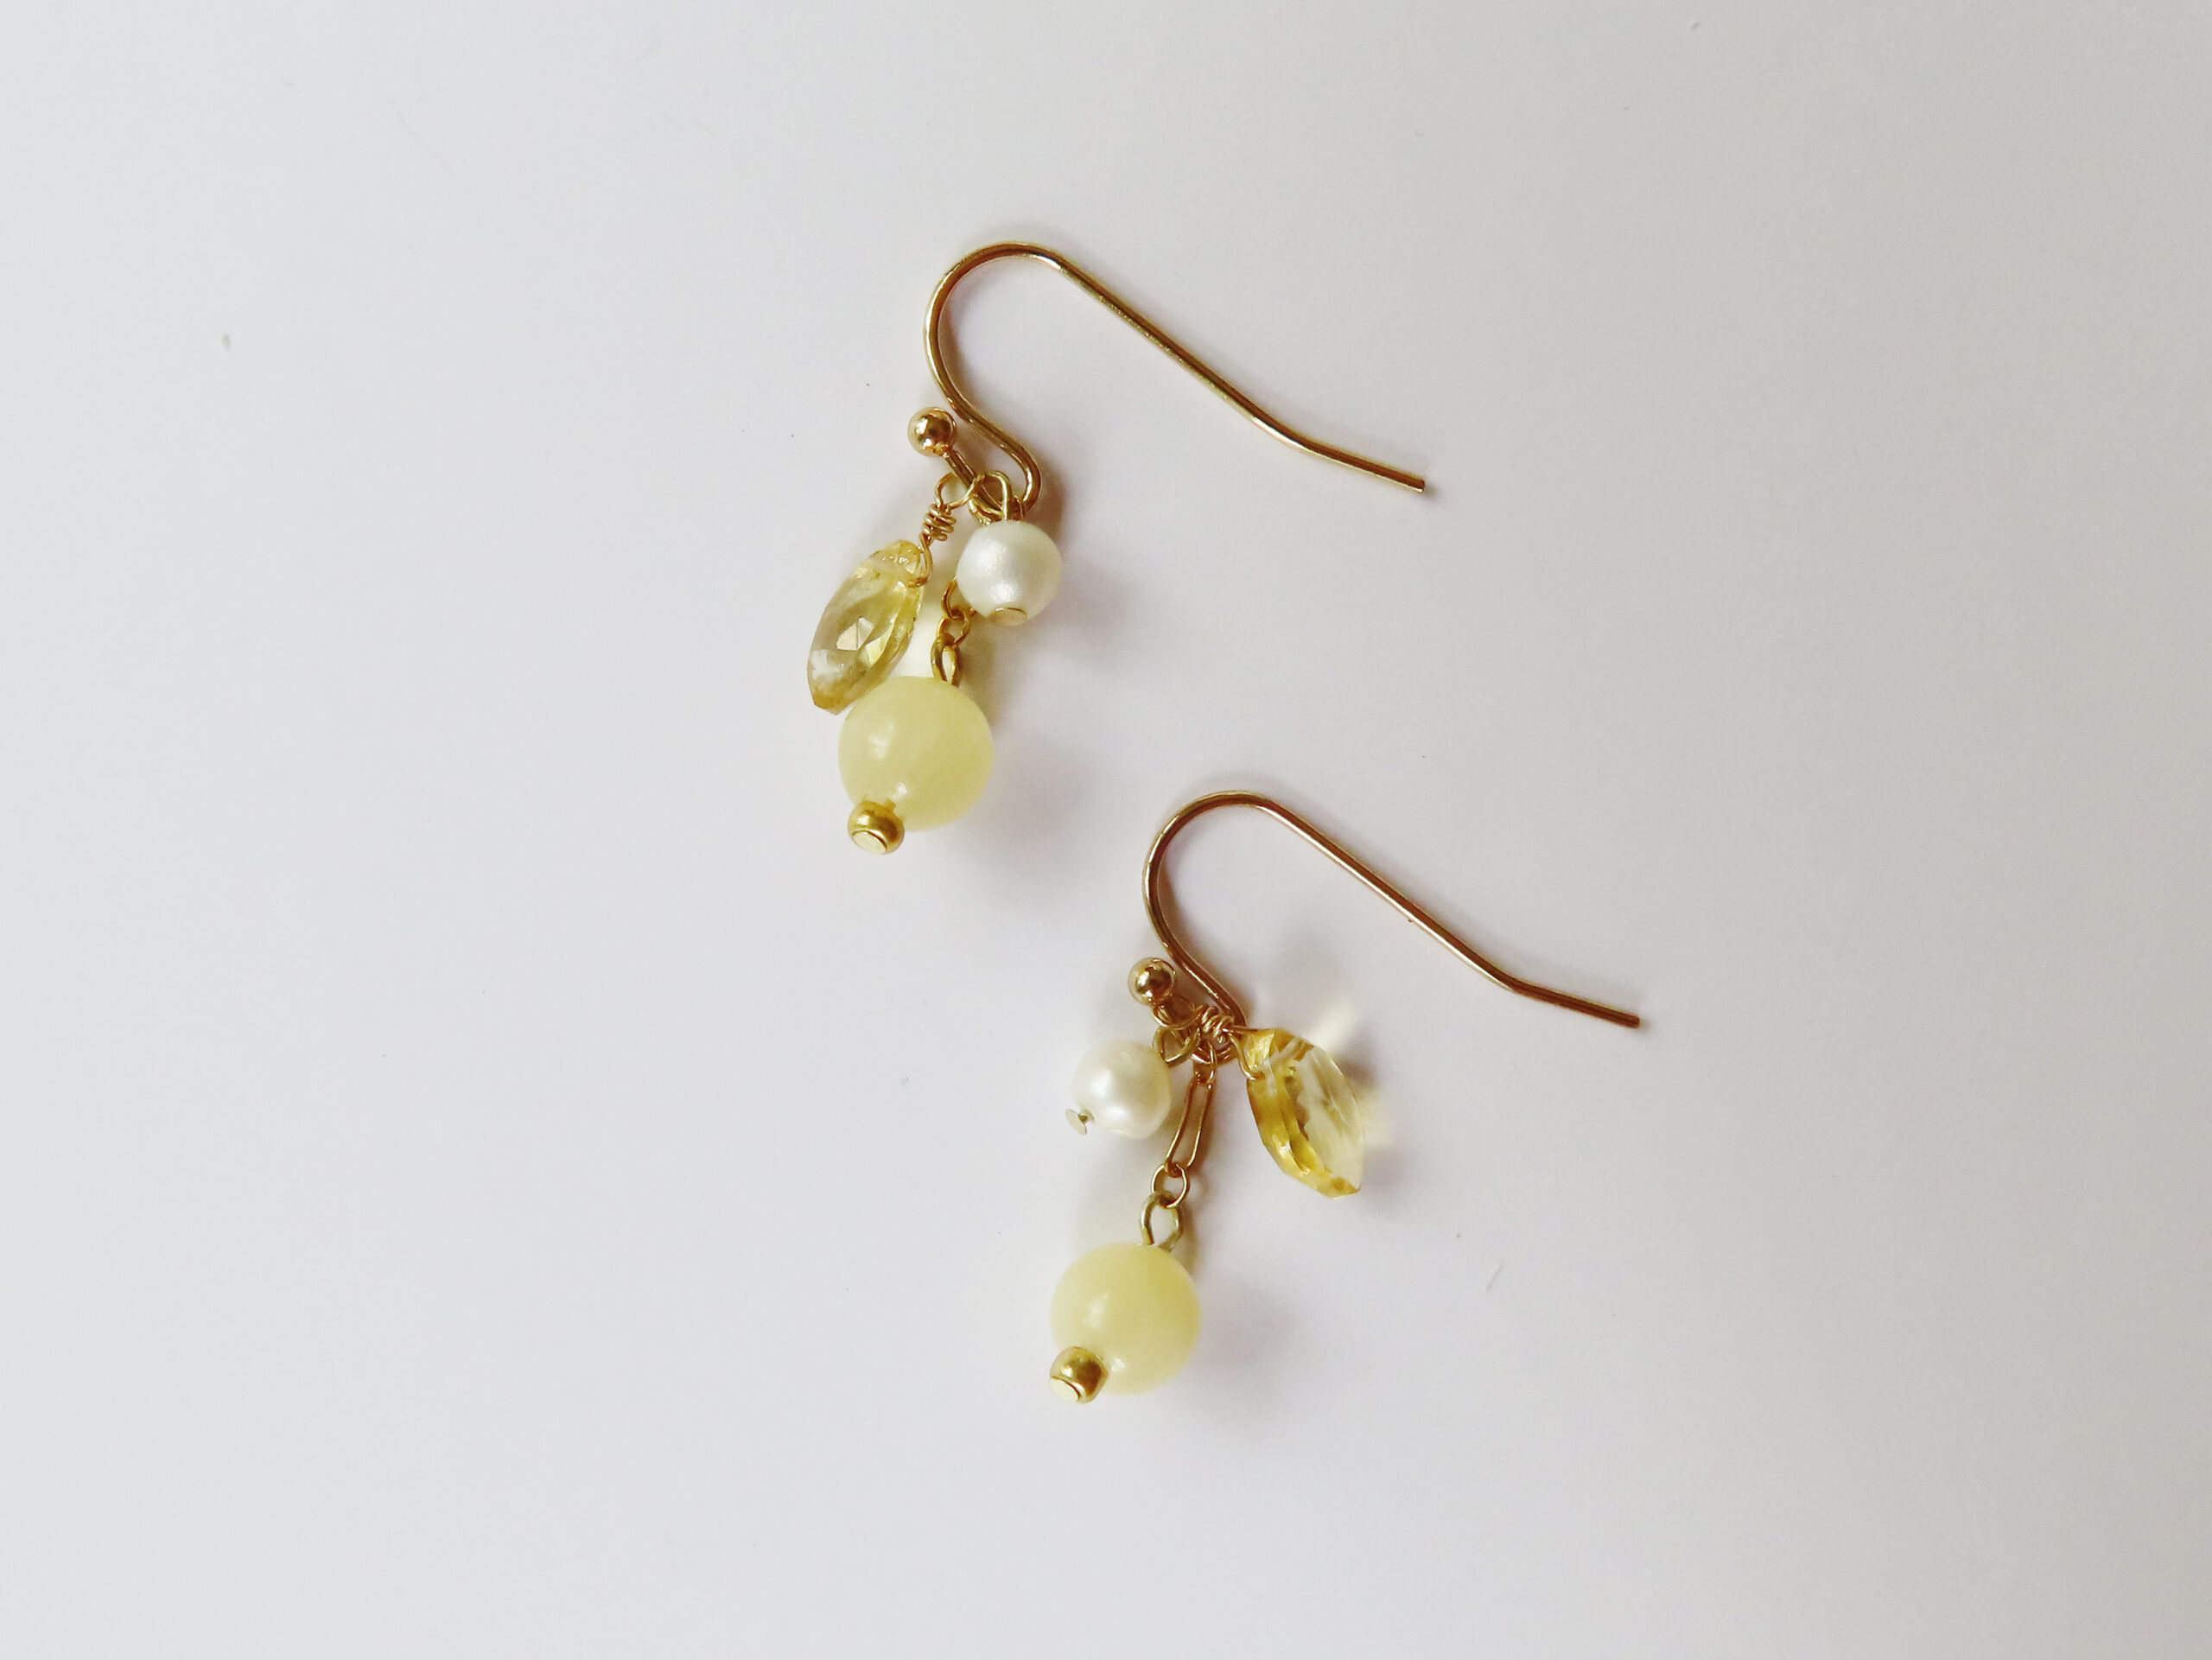 honey stone, yellow citrine earrings